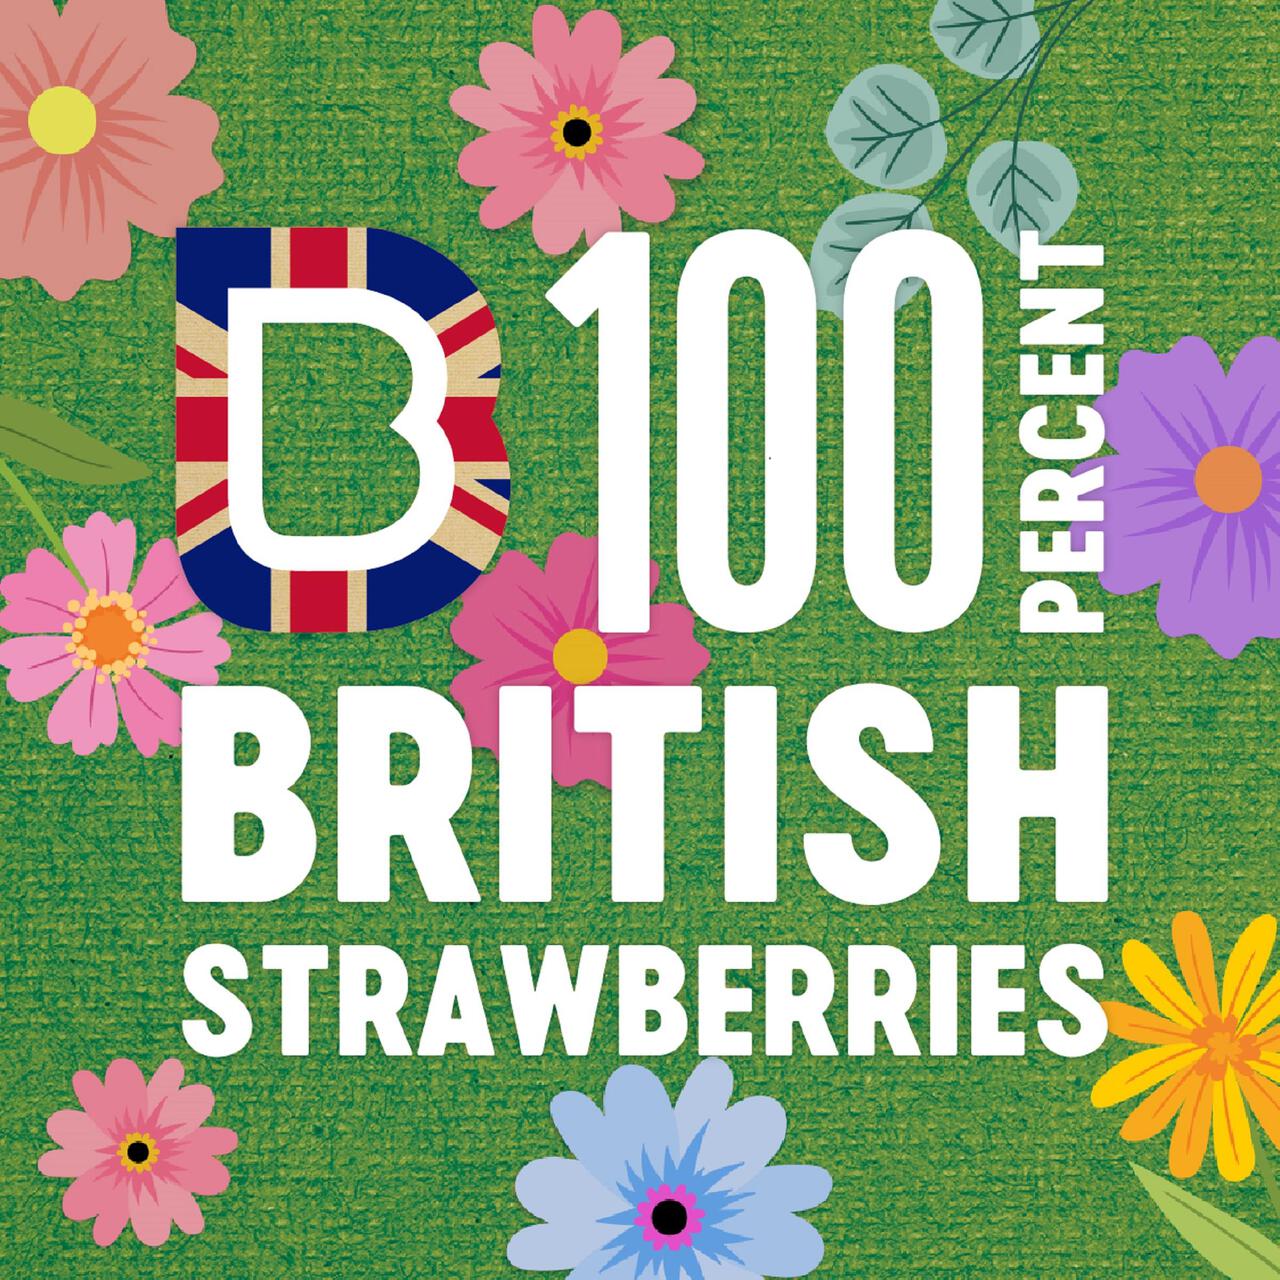 BerryWorld British Strawberries 227g